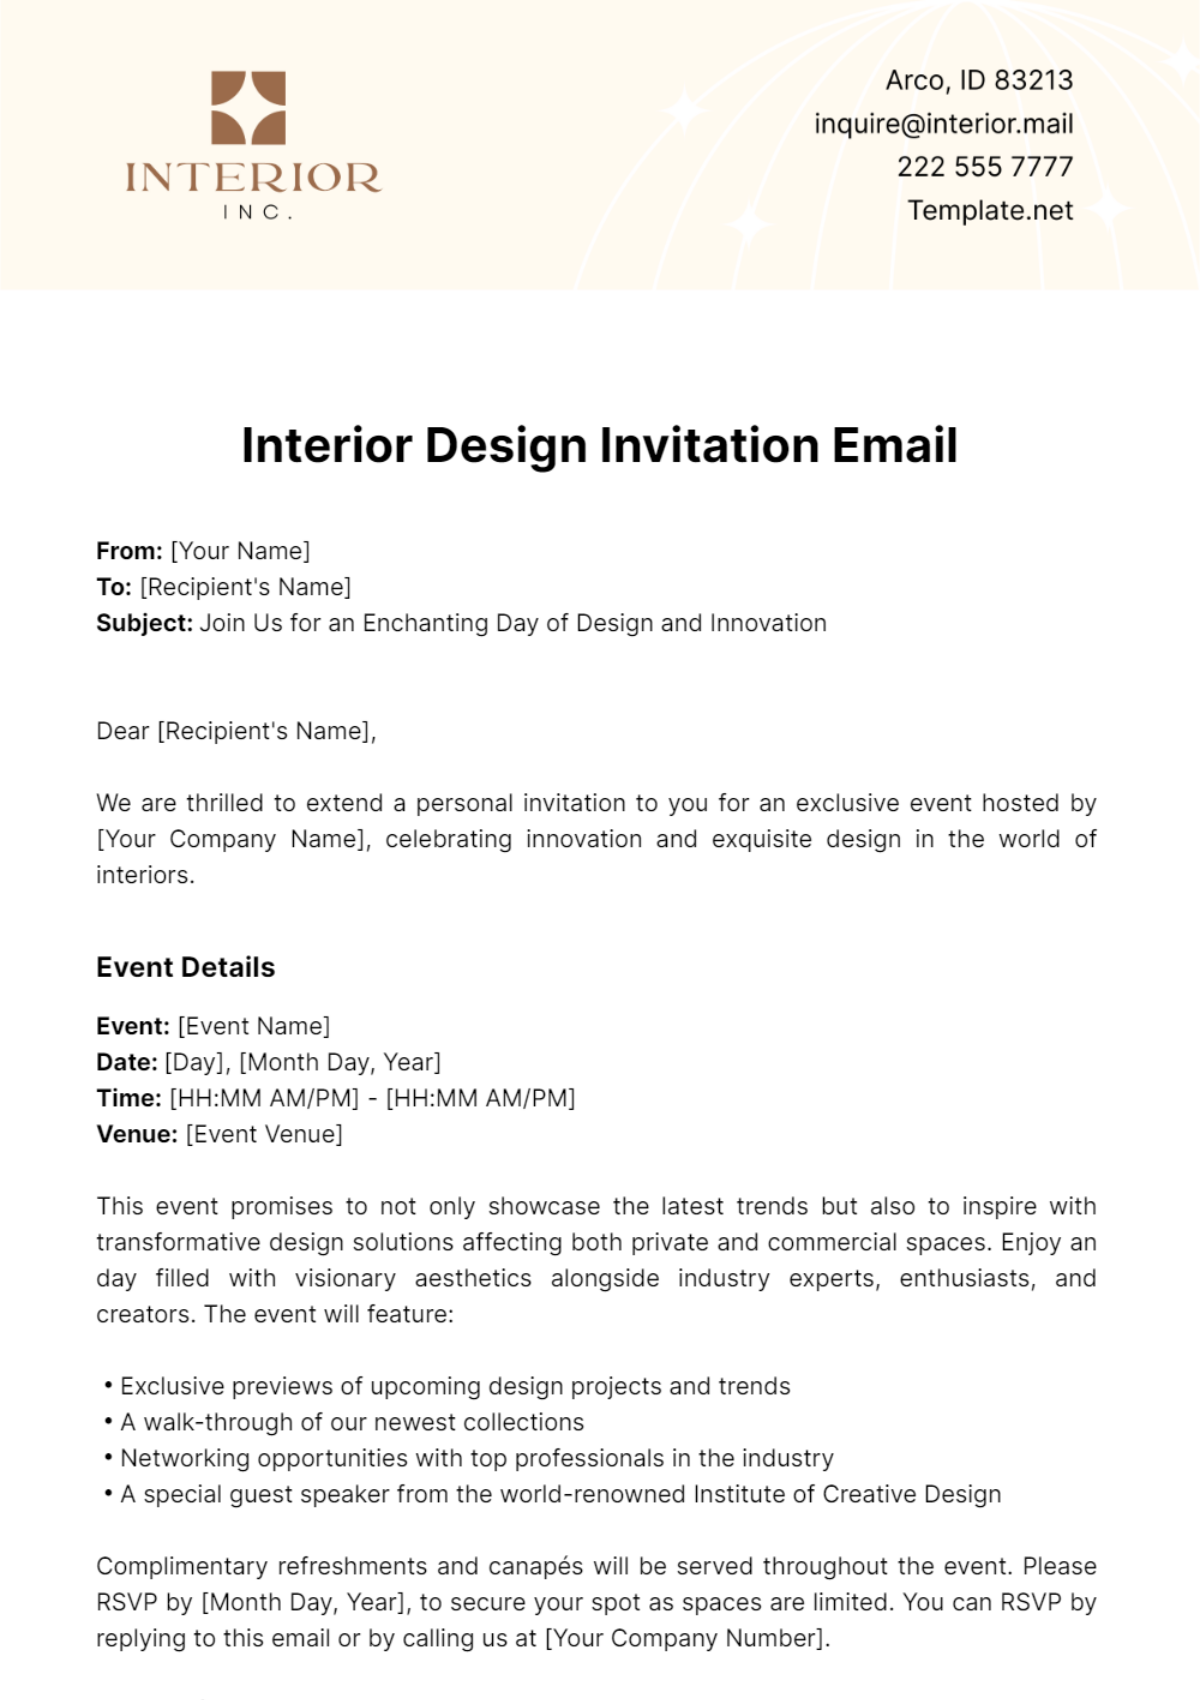 Free Interior Design Invitation Email Template